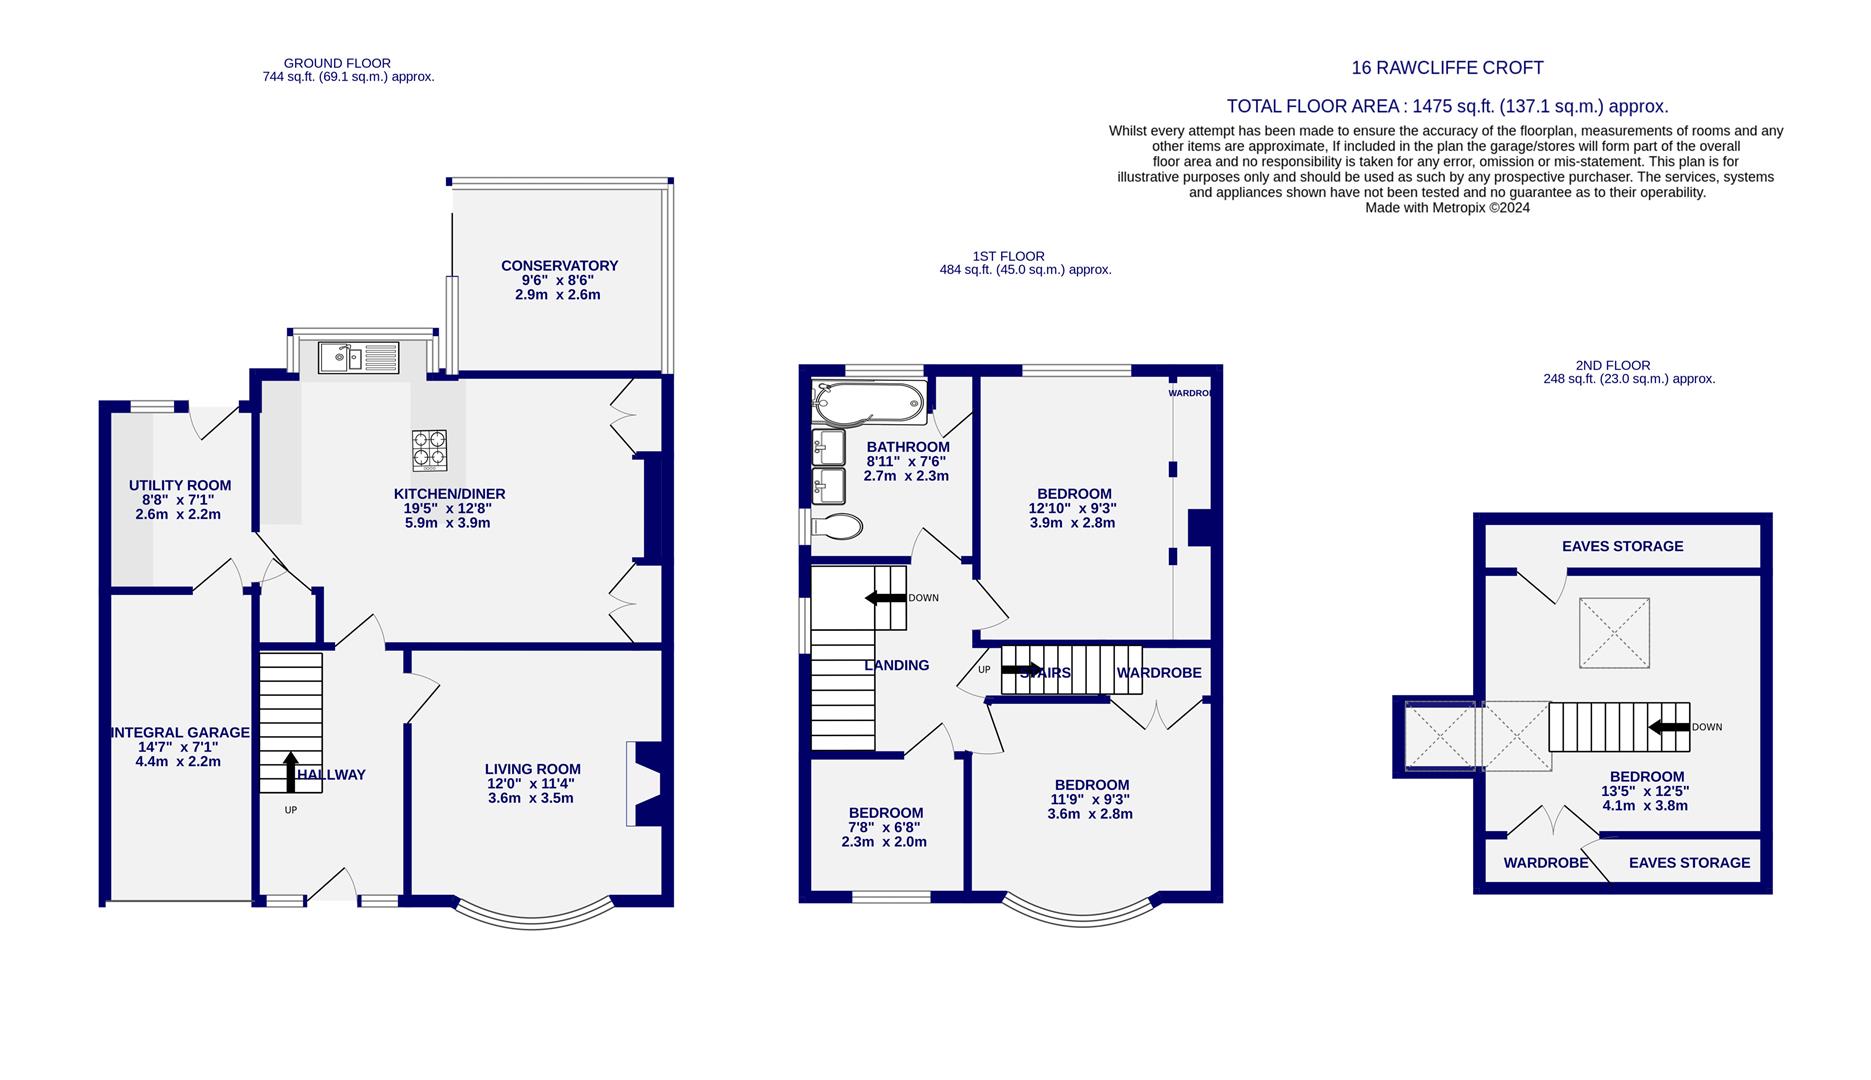 Floorplans For Rawcliffe Croft, York, YO30 5UT